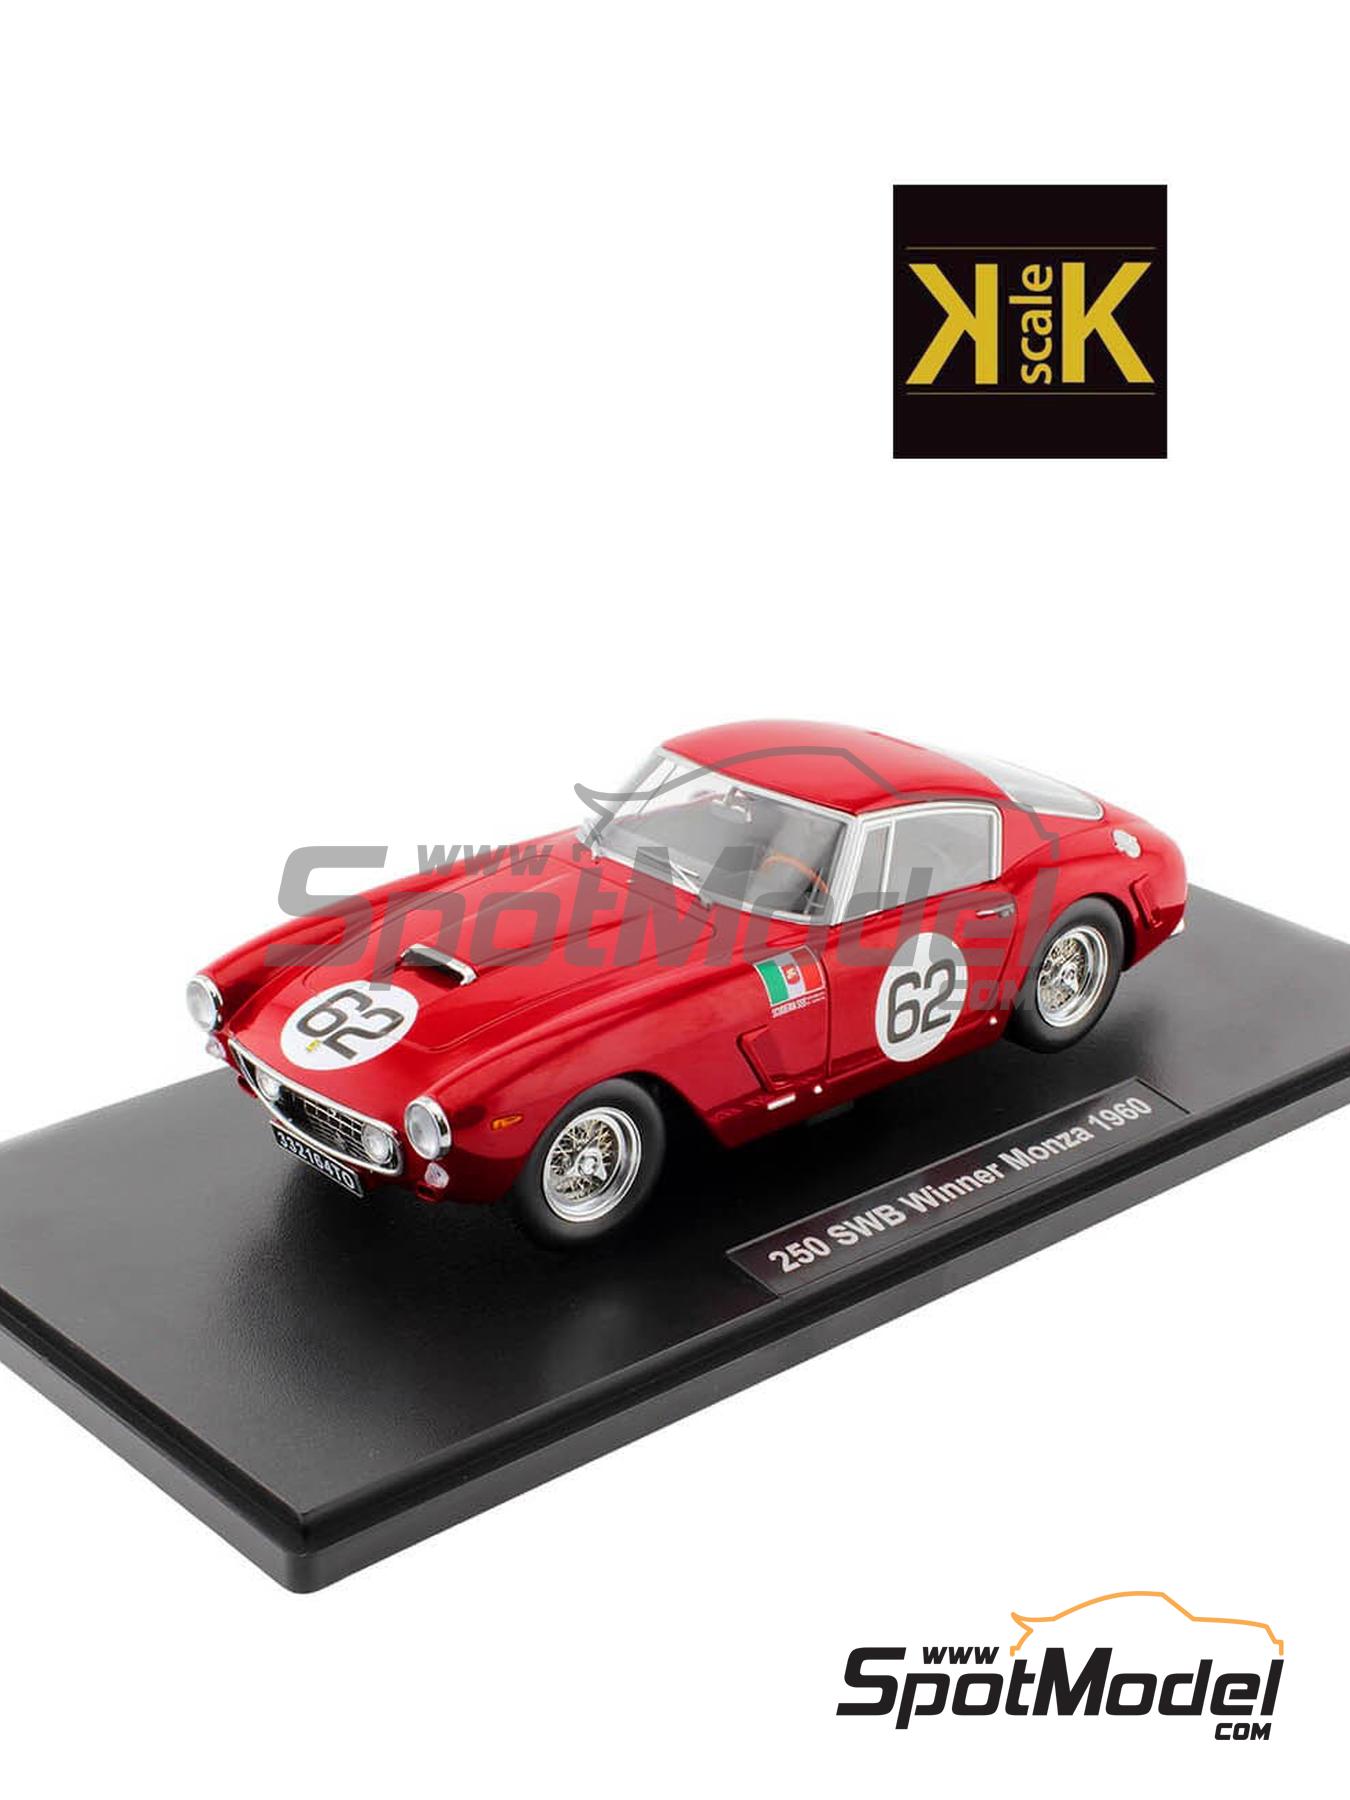 KK Scale KKDC180864: Diecast model car 1/18 scale - Ferrari 250 GT 